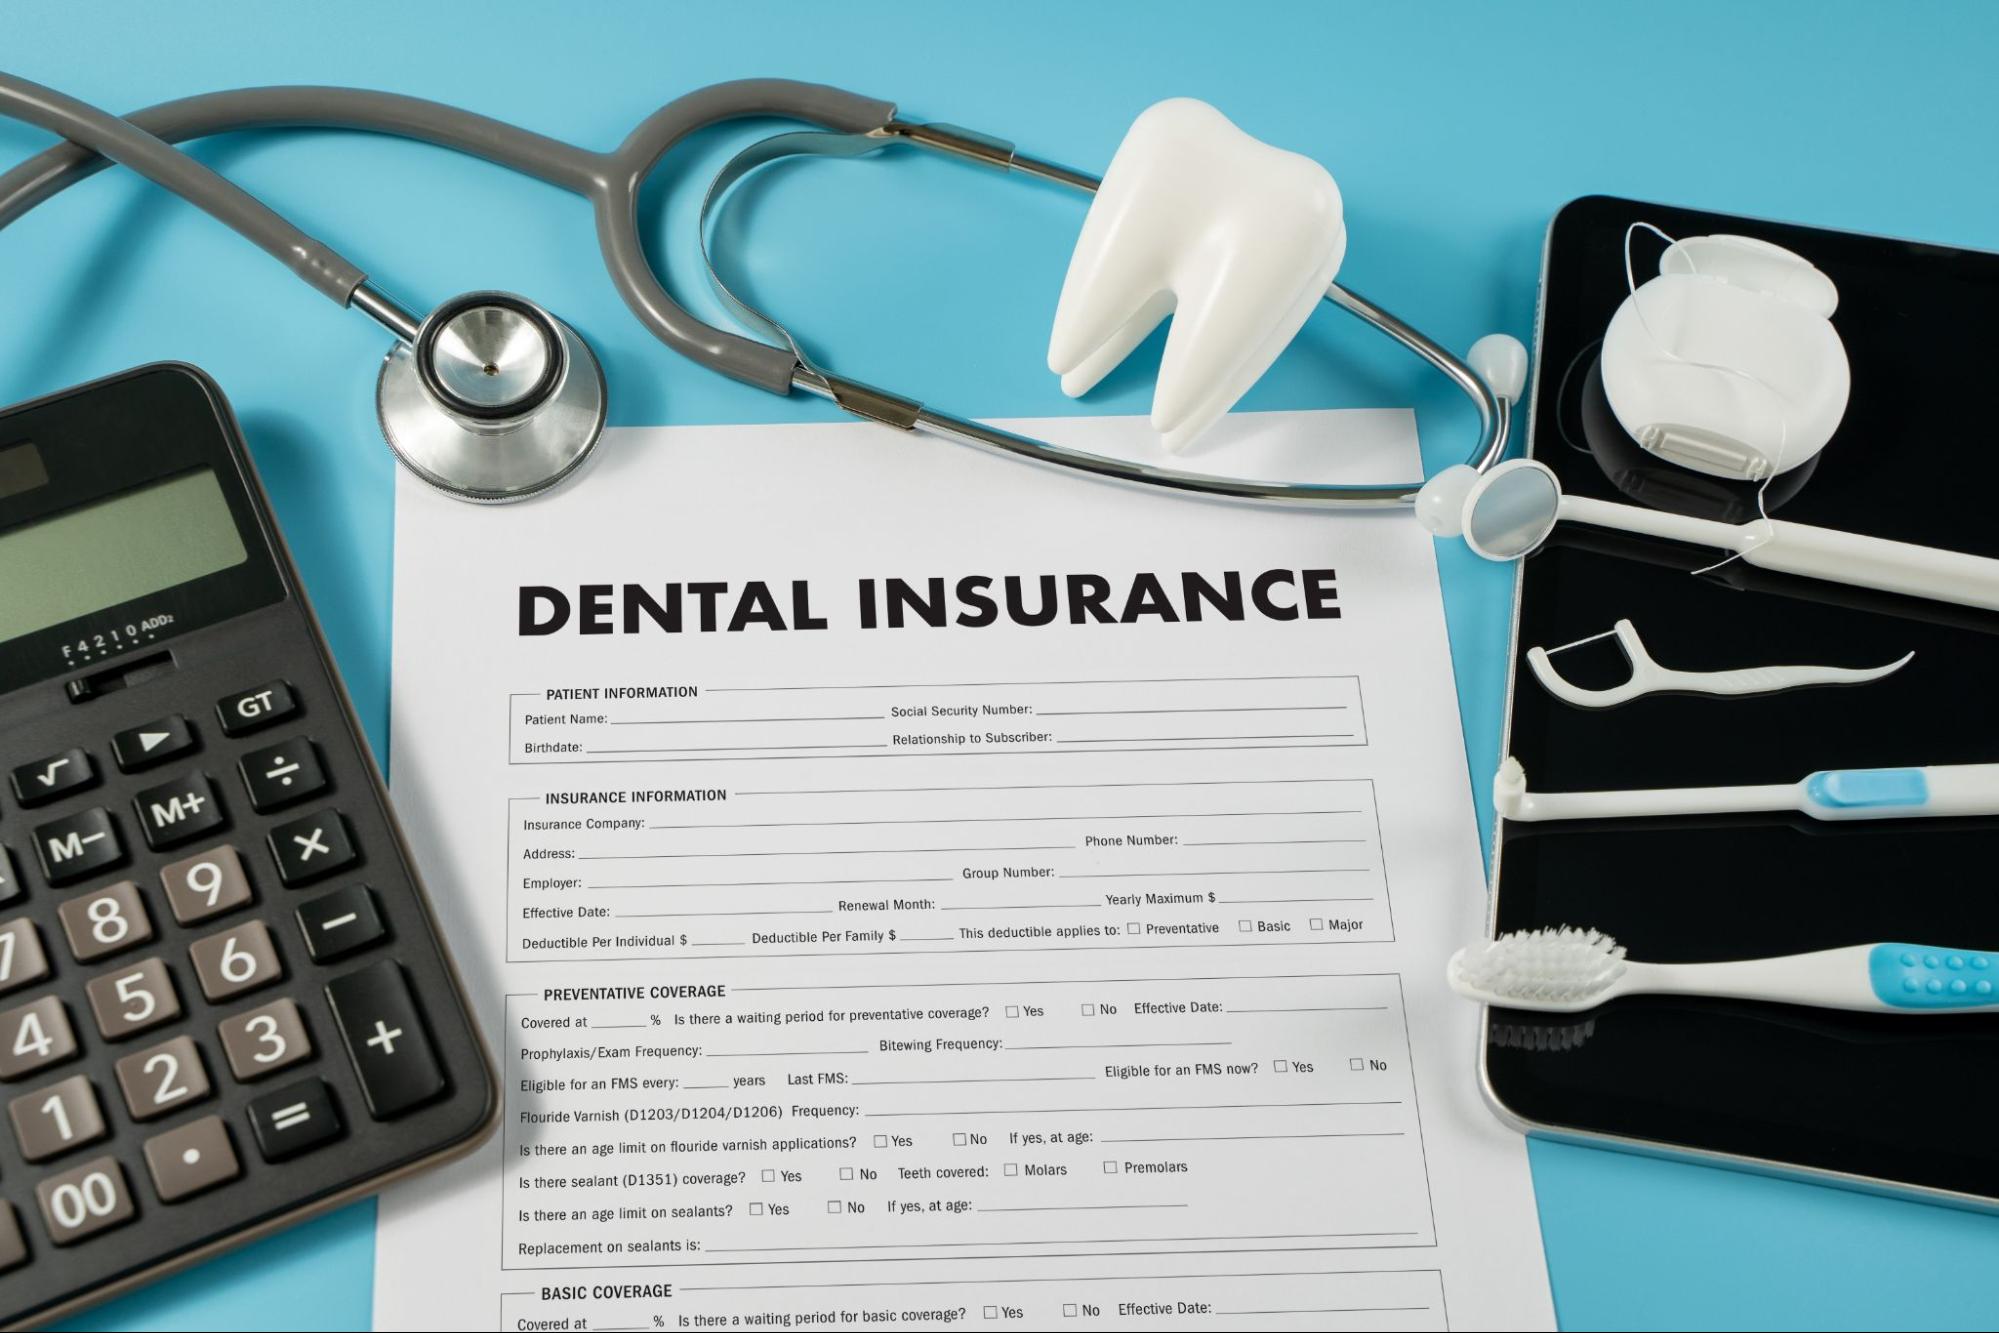 Health, Life, & Dental Insurance in Carrollton